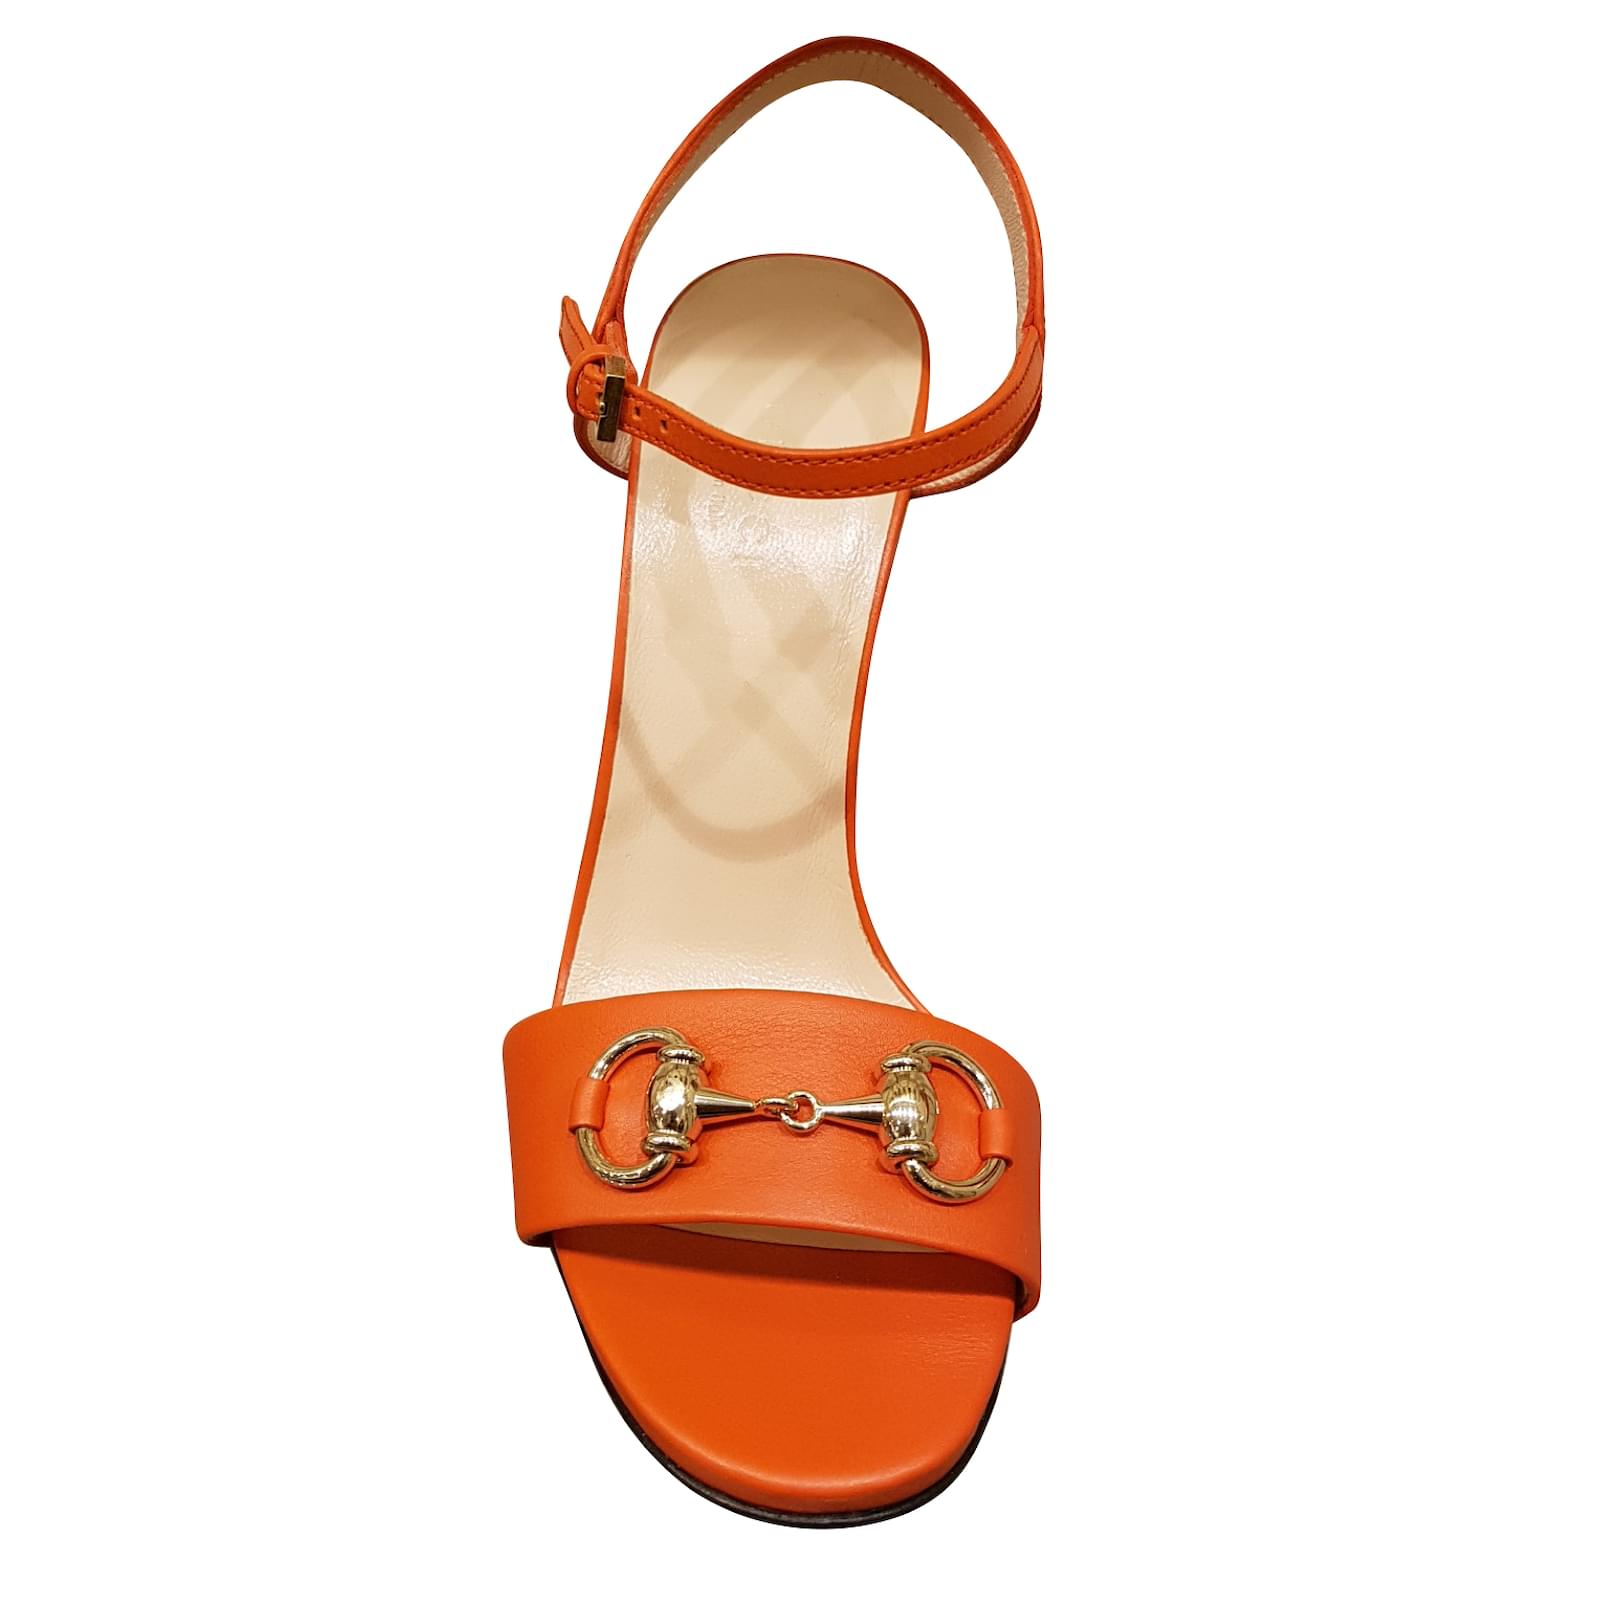 orange gucci sandals